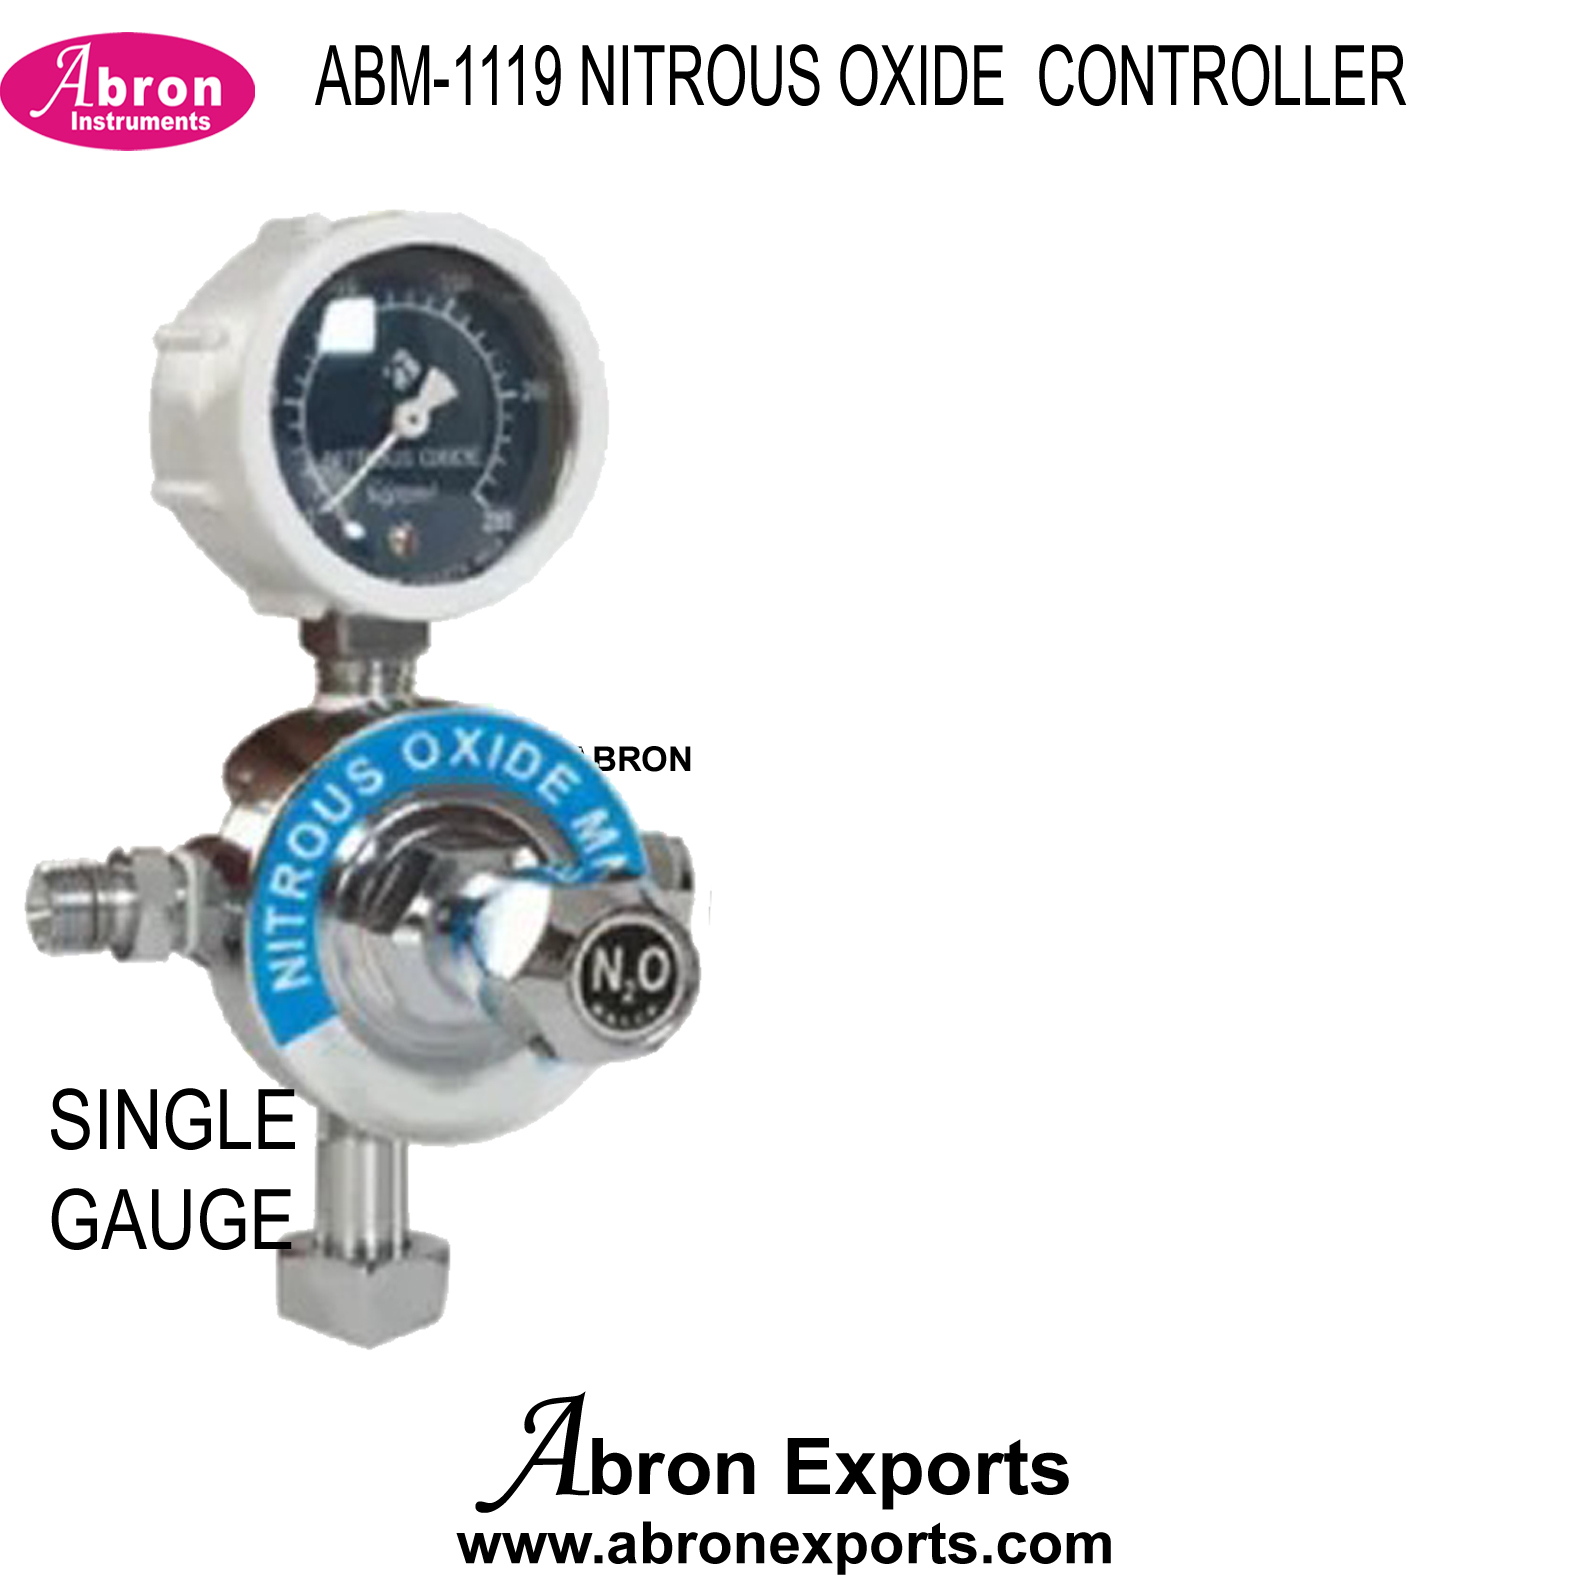 Medical Gas Nitrous Oxide controller 1 gauge regulator for pipe line terminal Unit Regulator with gauge 1 no Abron ABM-1119N1 